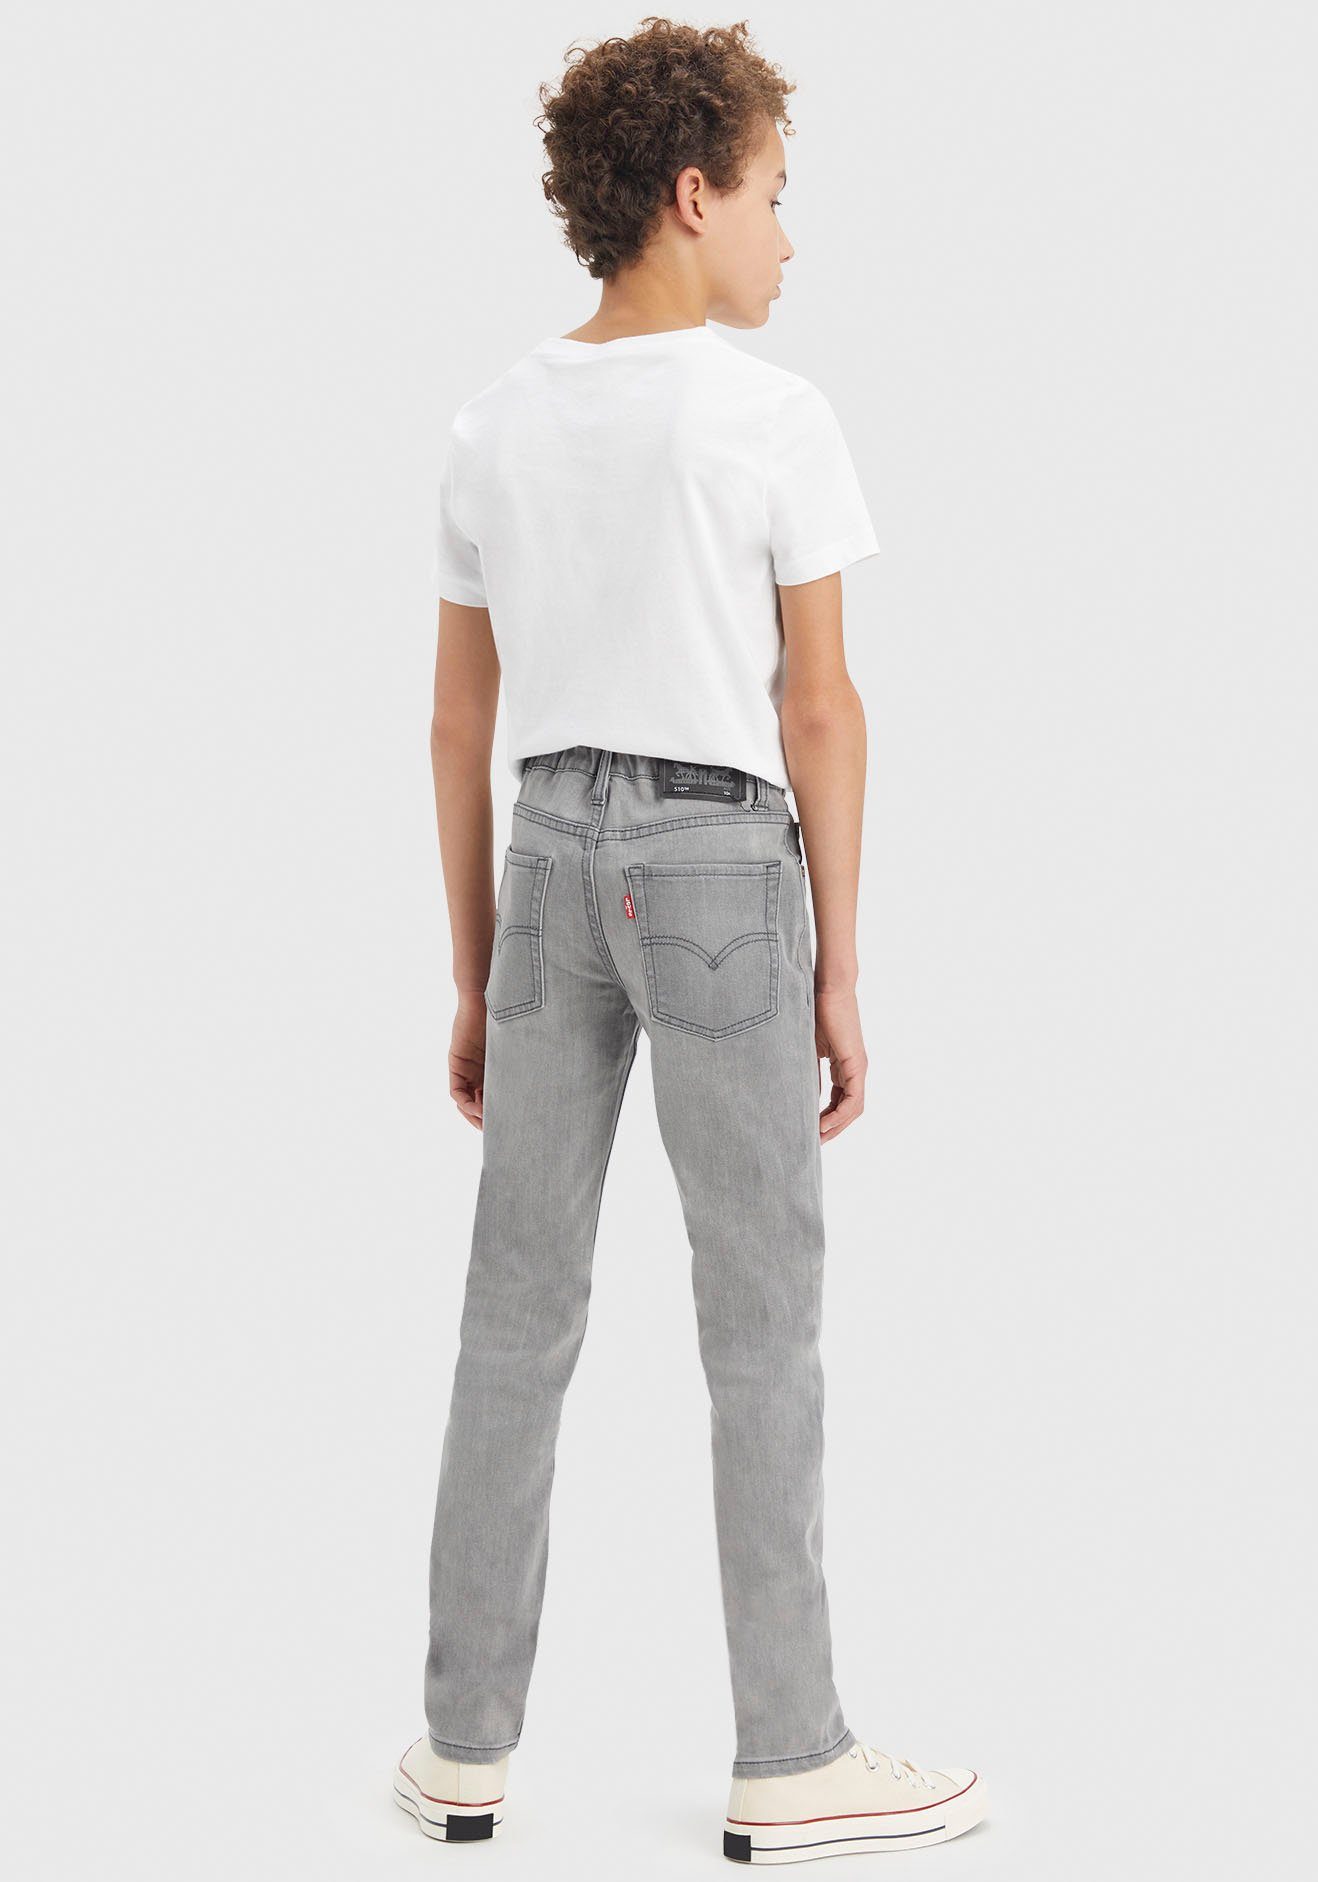 510 Levi's® FIT JEANS BOYS grey SKINNY for Kids is bett Skinny-fit-Jeans